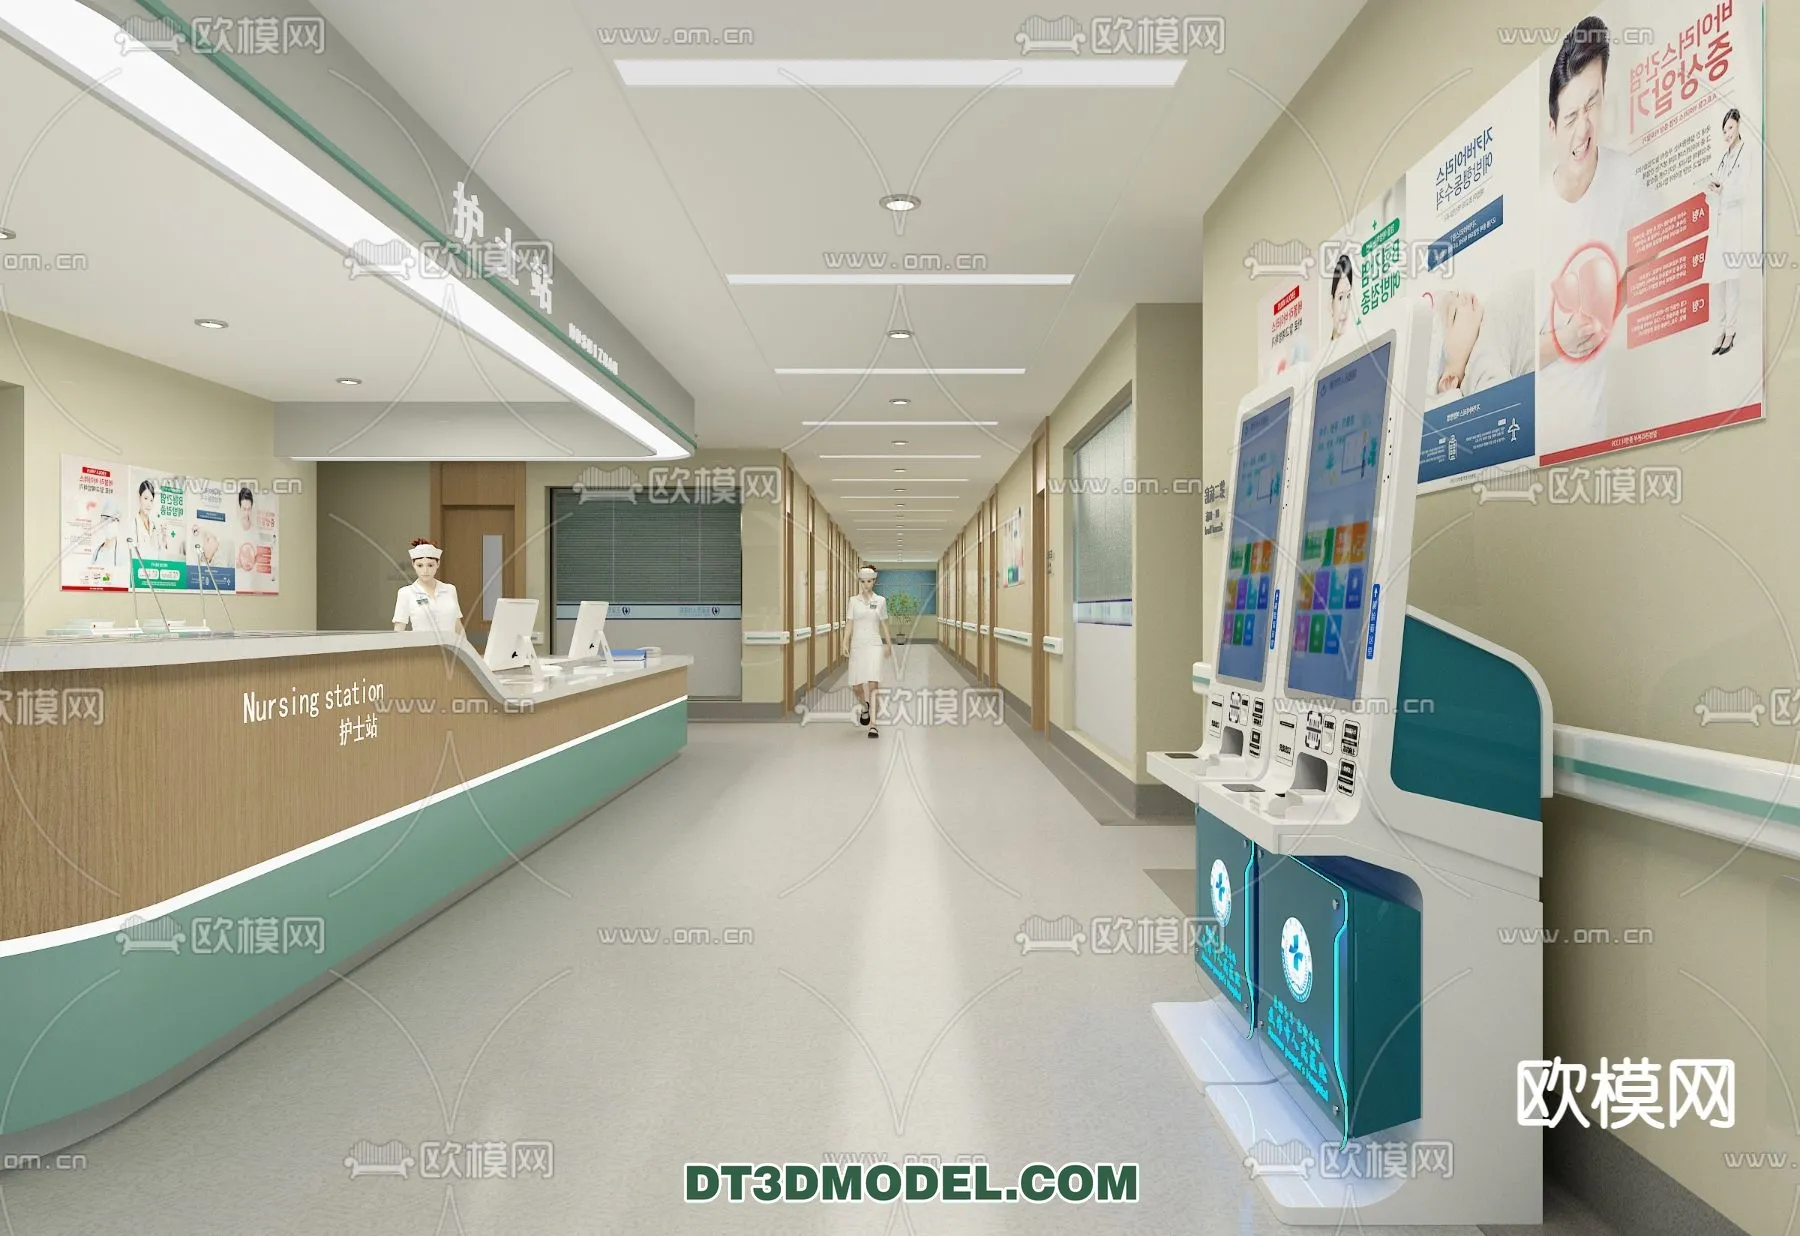 HOSPITAL 3D SCENES – MODERN – 0067